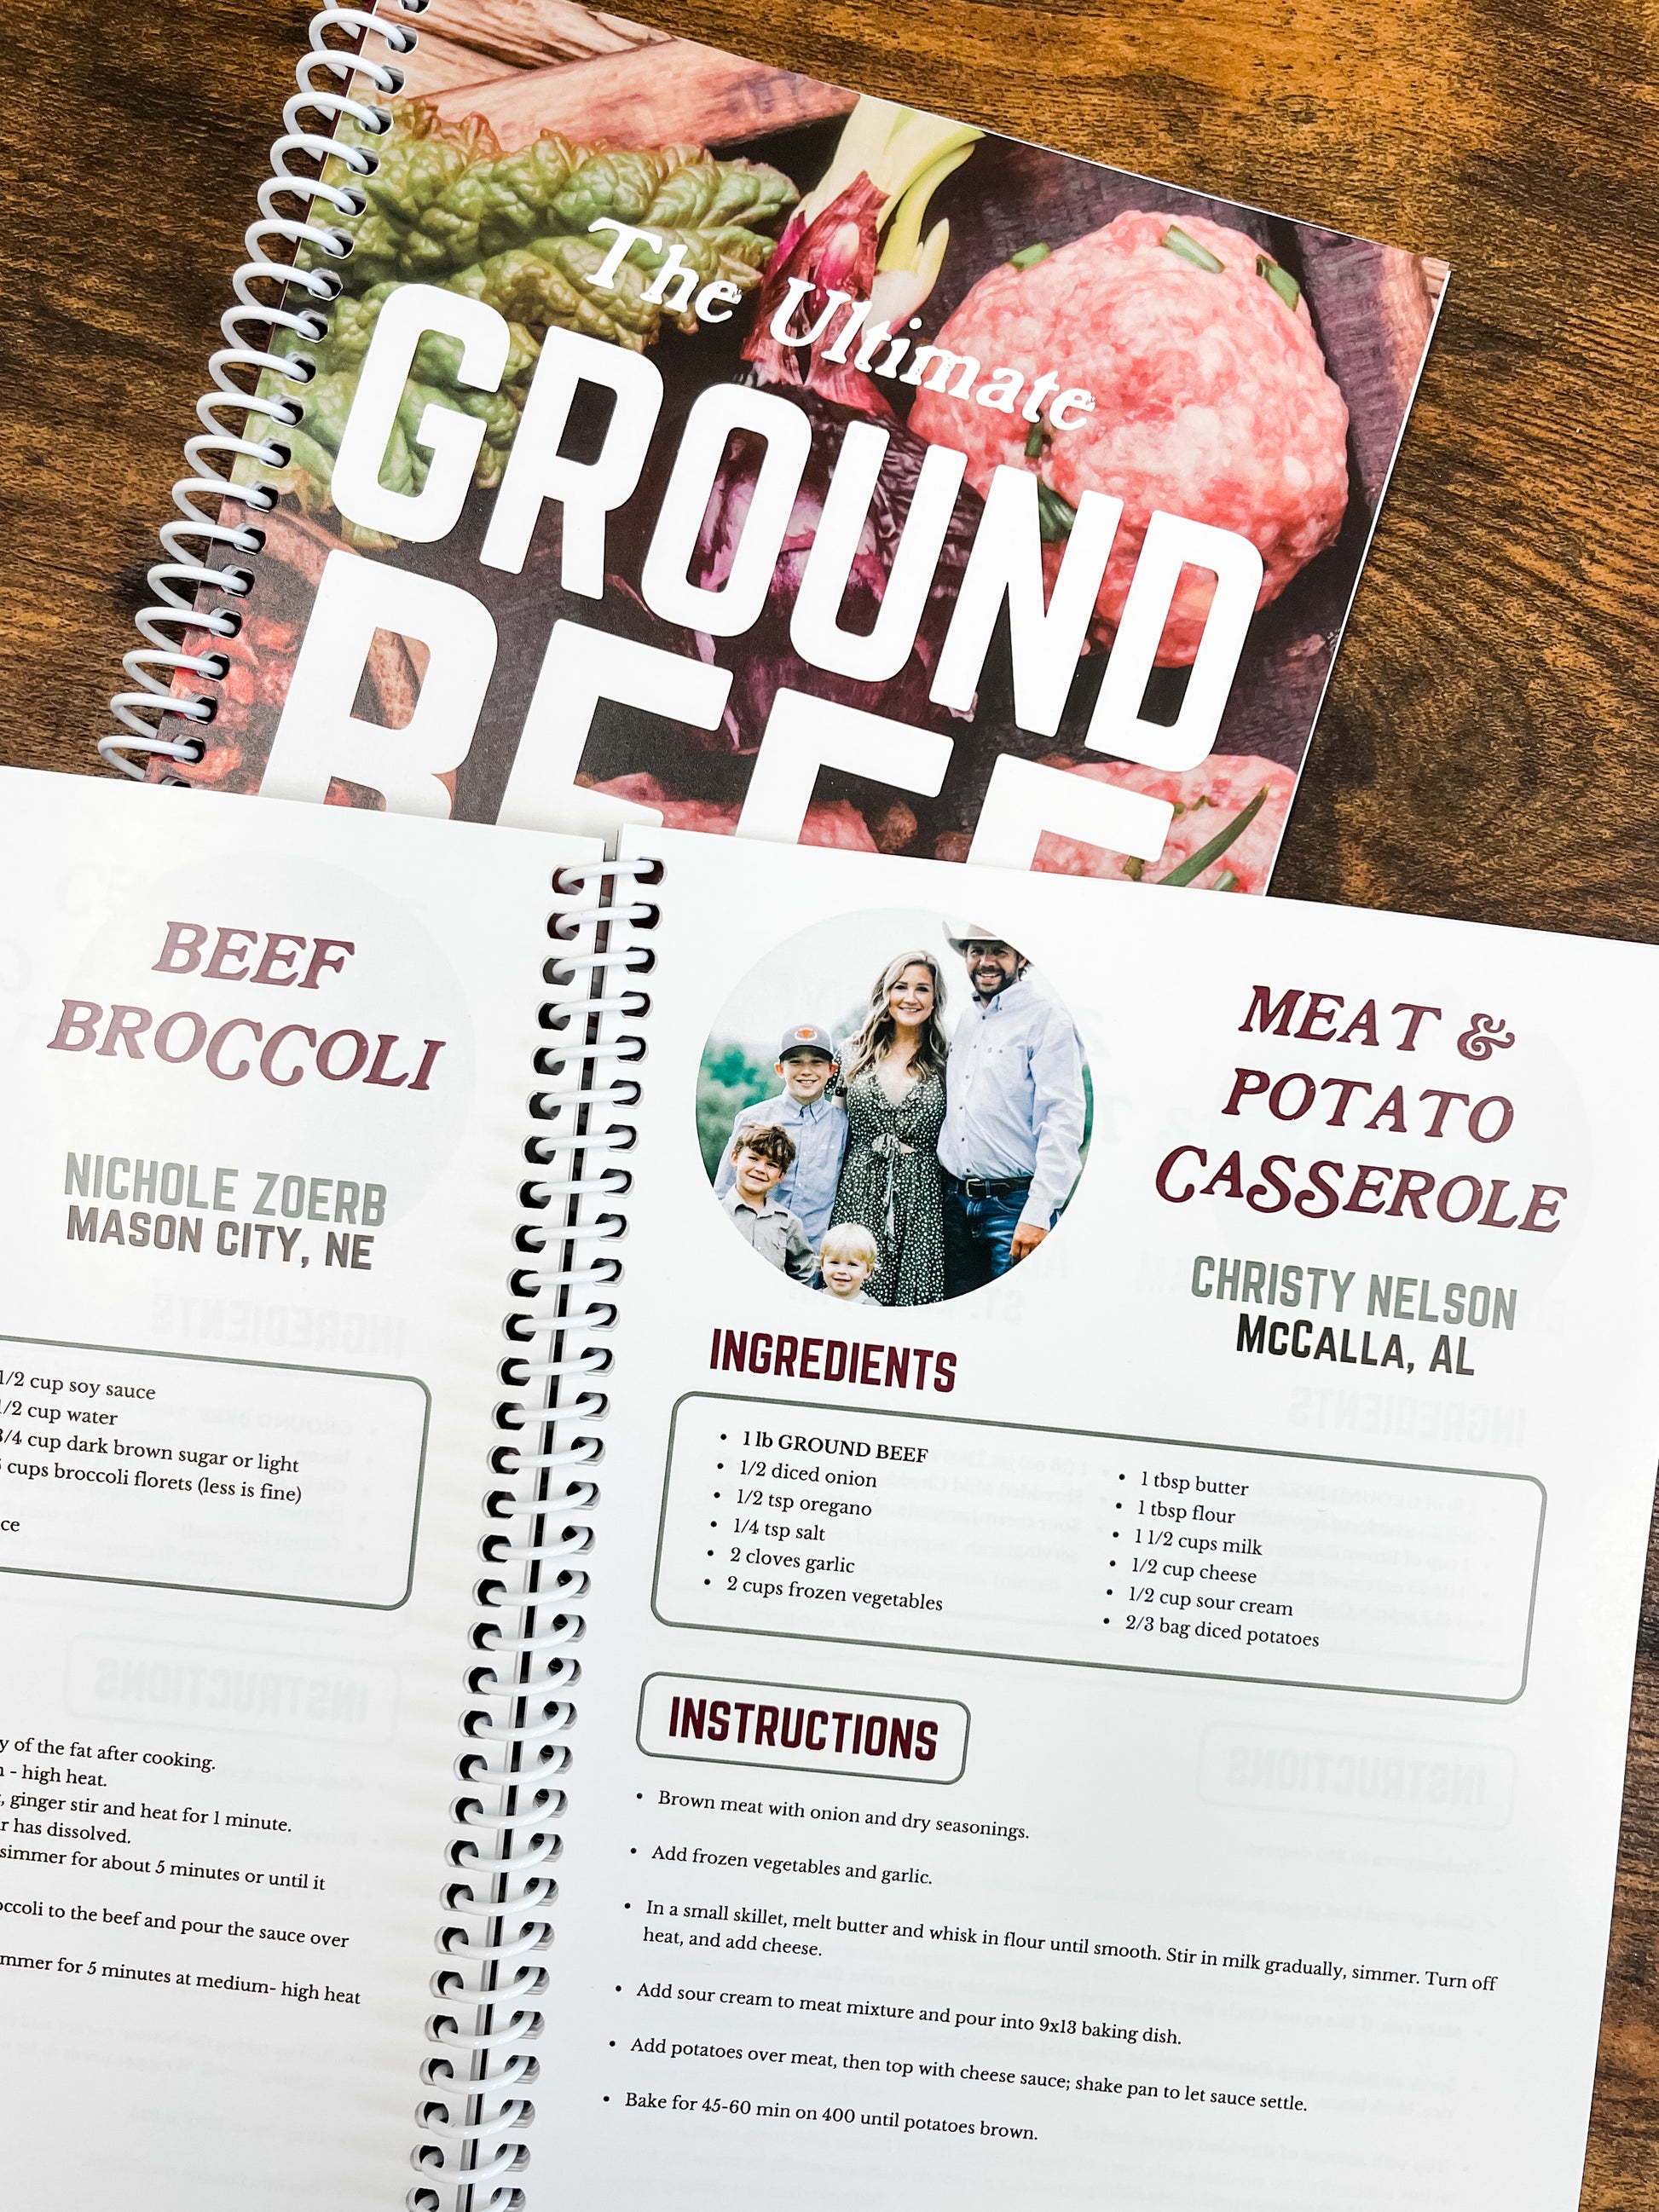 Ultimate ground beef cookbook with met & potato casserole recipe shown